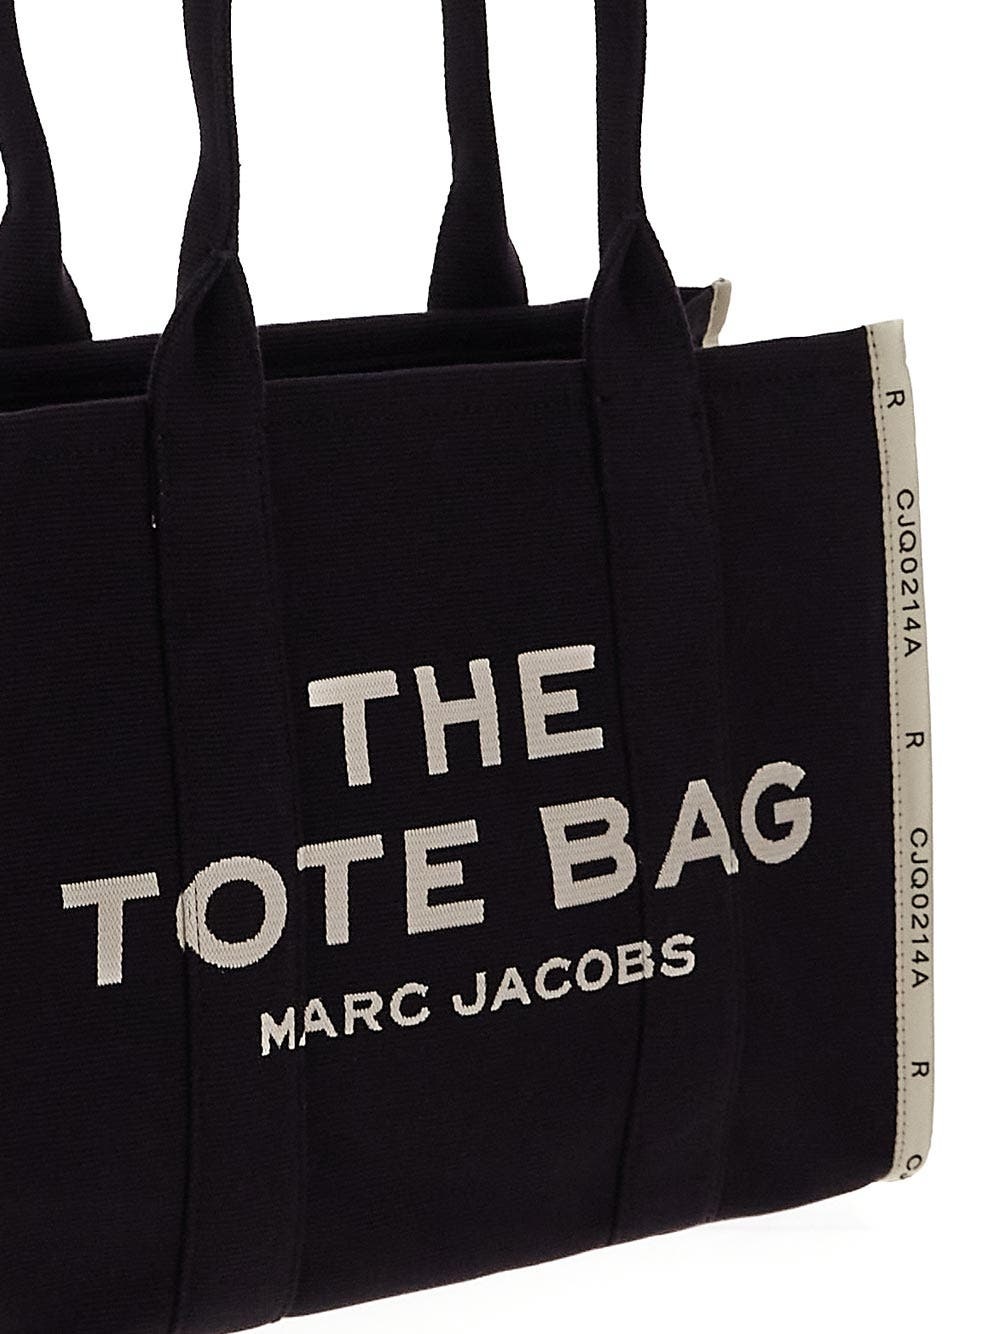 The Tote Bag - 4